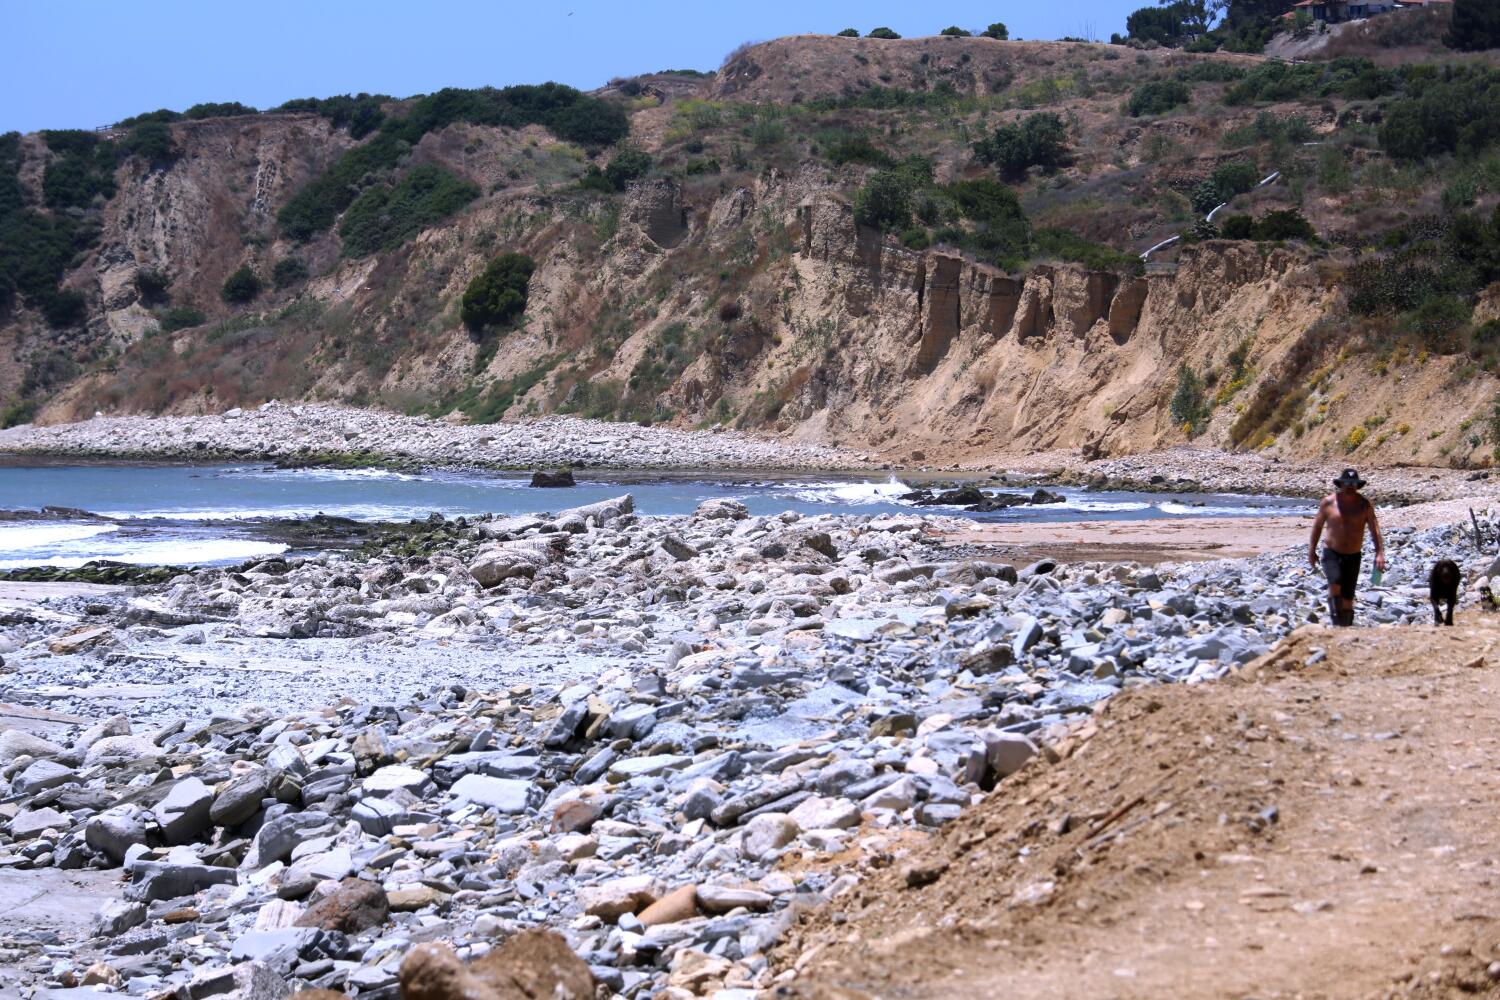 Rancho Palos Verdes landslide is creating a new beach. 'It's unreal'